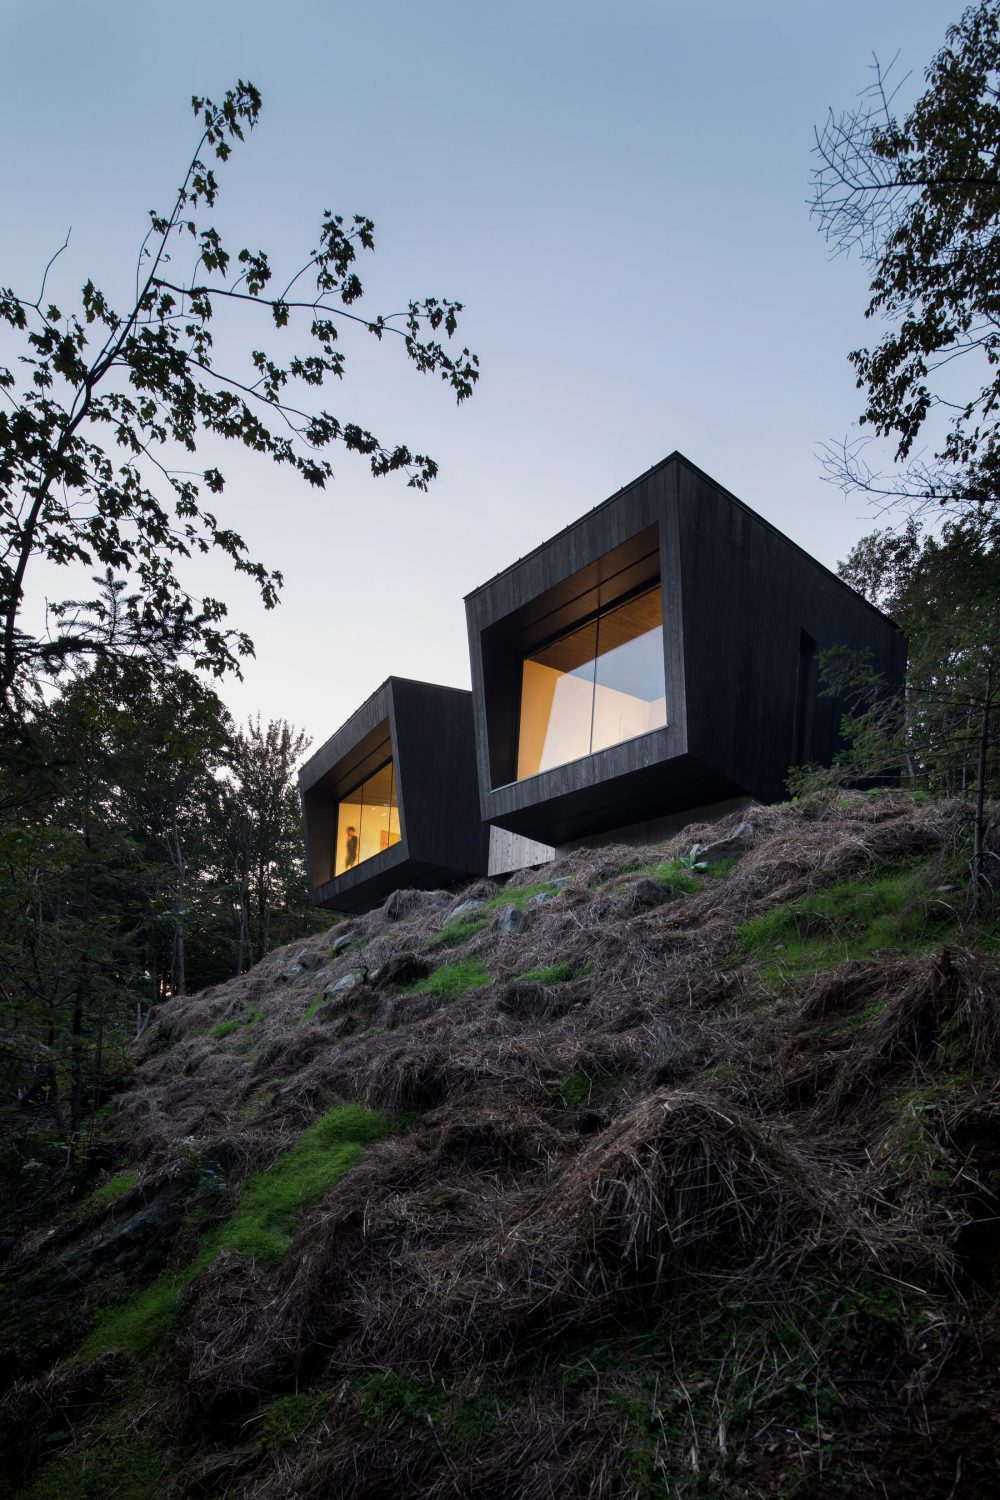 La Binocle – Blackened Wood Cabins by NatureHumaine